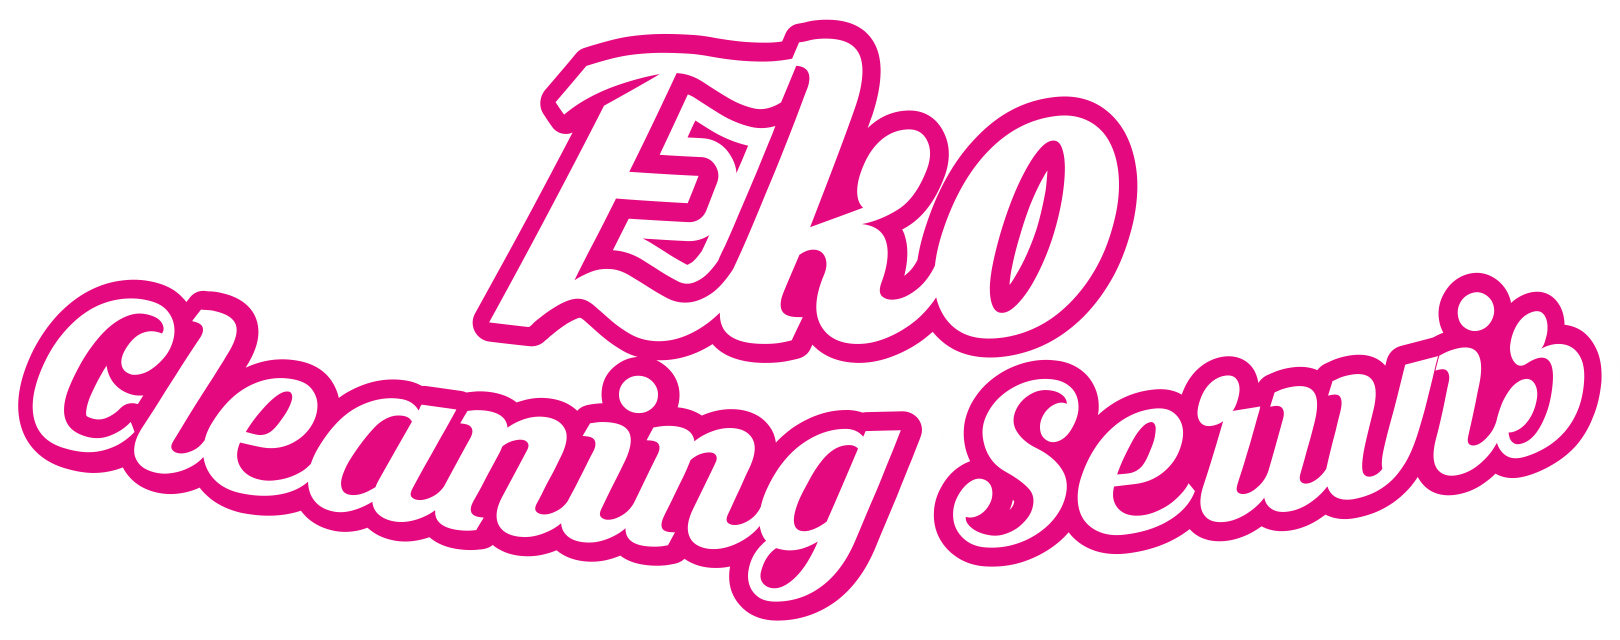 Eko Cleaning Serwis